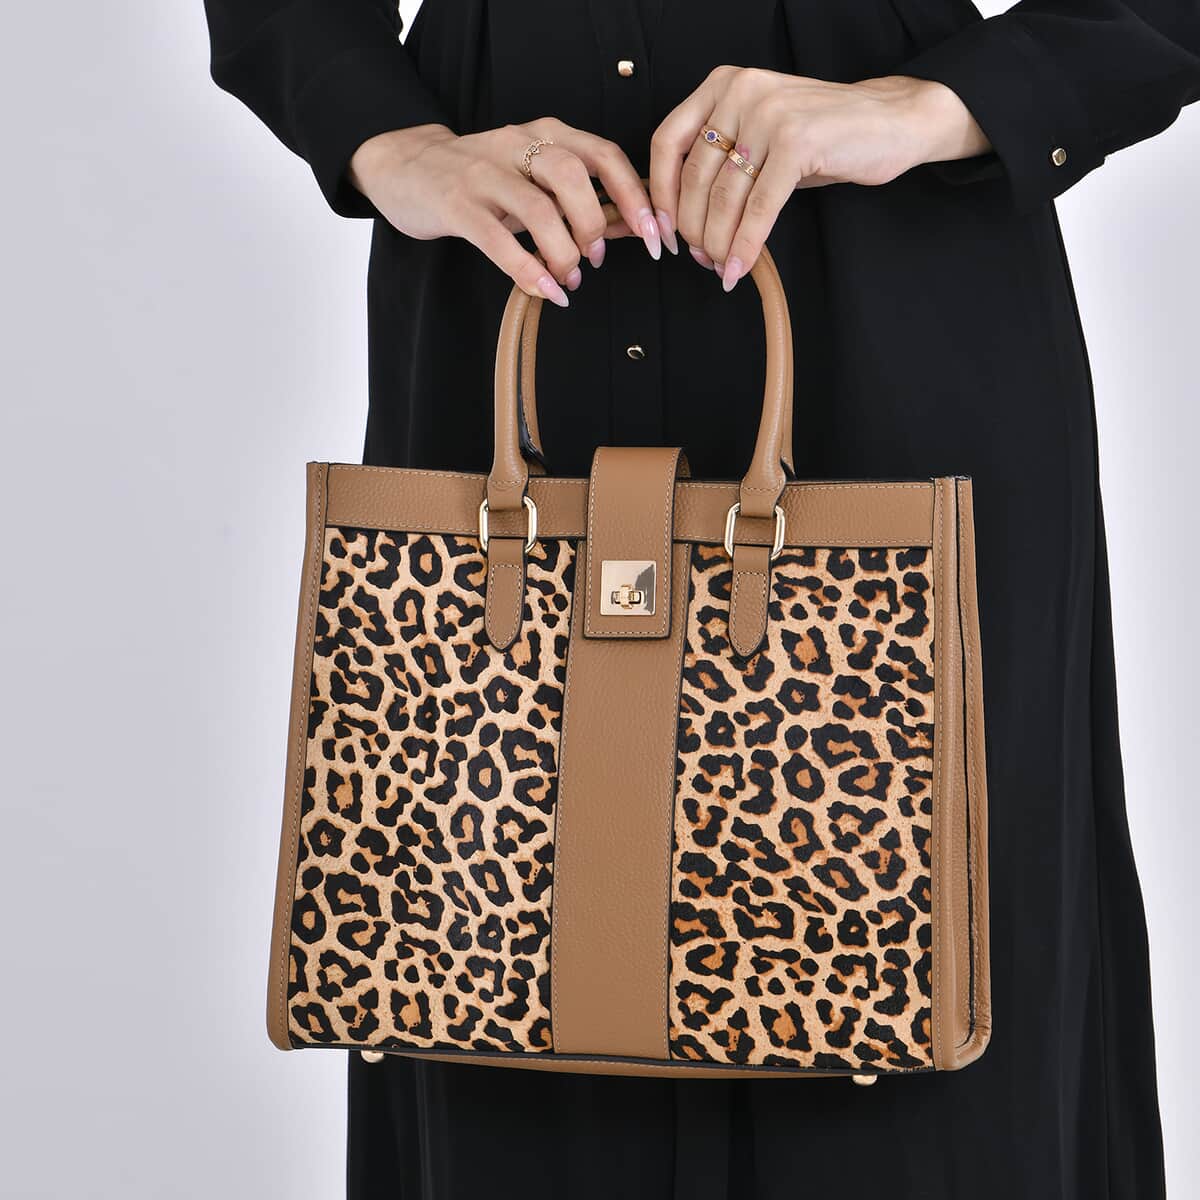 LA Marey Tan and Black Leopard Print Genuine Leather Tote Bag (13"x5.5"x0.8") image number 2